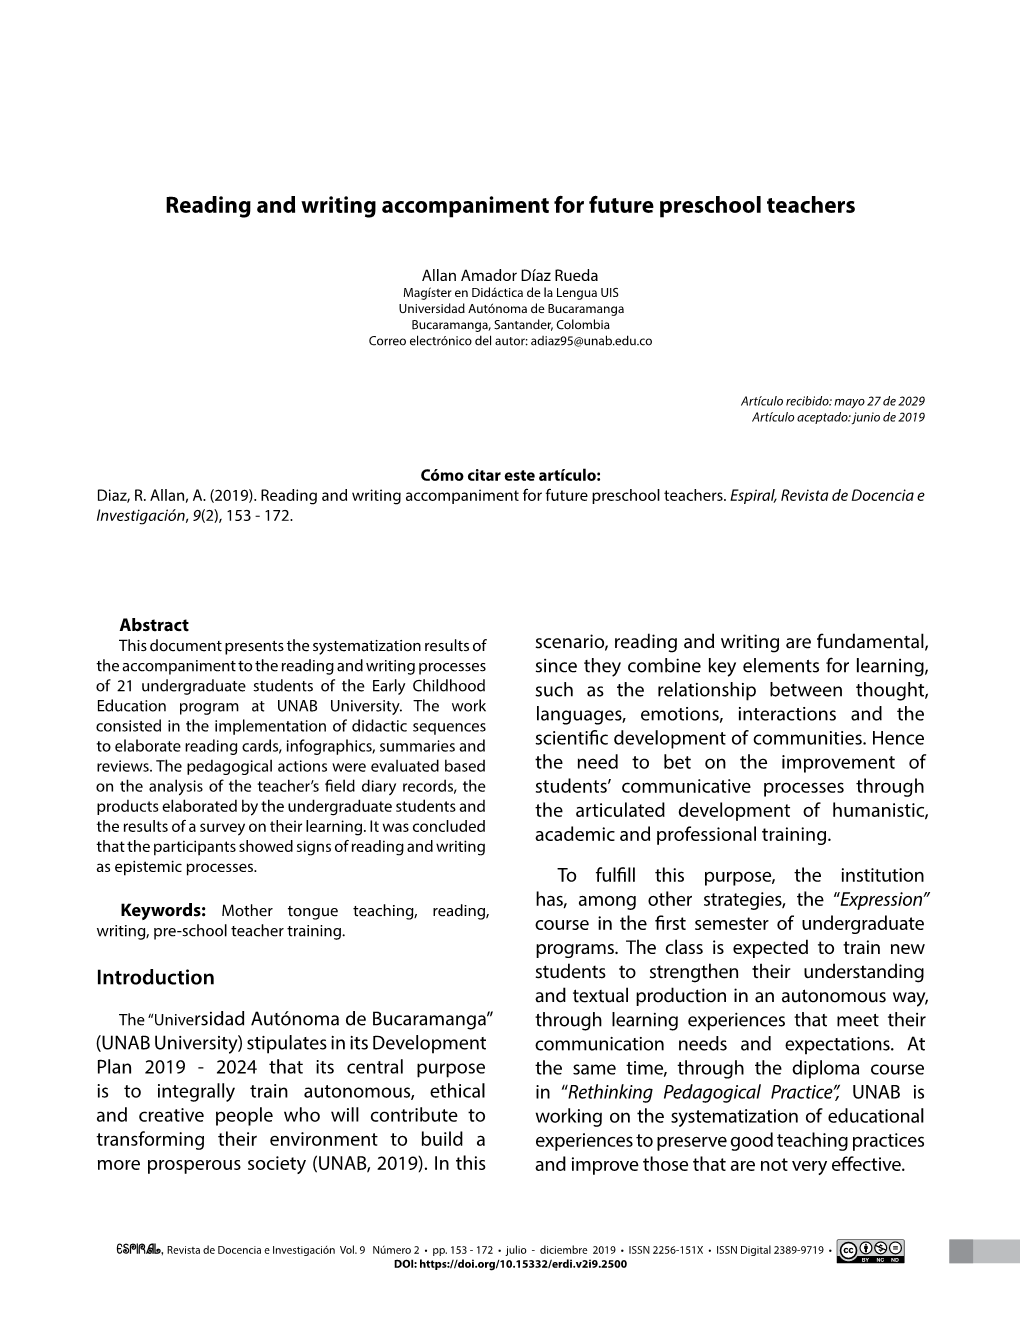 Reading and Writing Accompaniment for Future Preschool Teachers